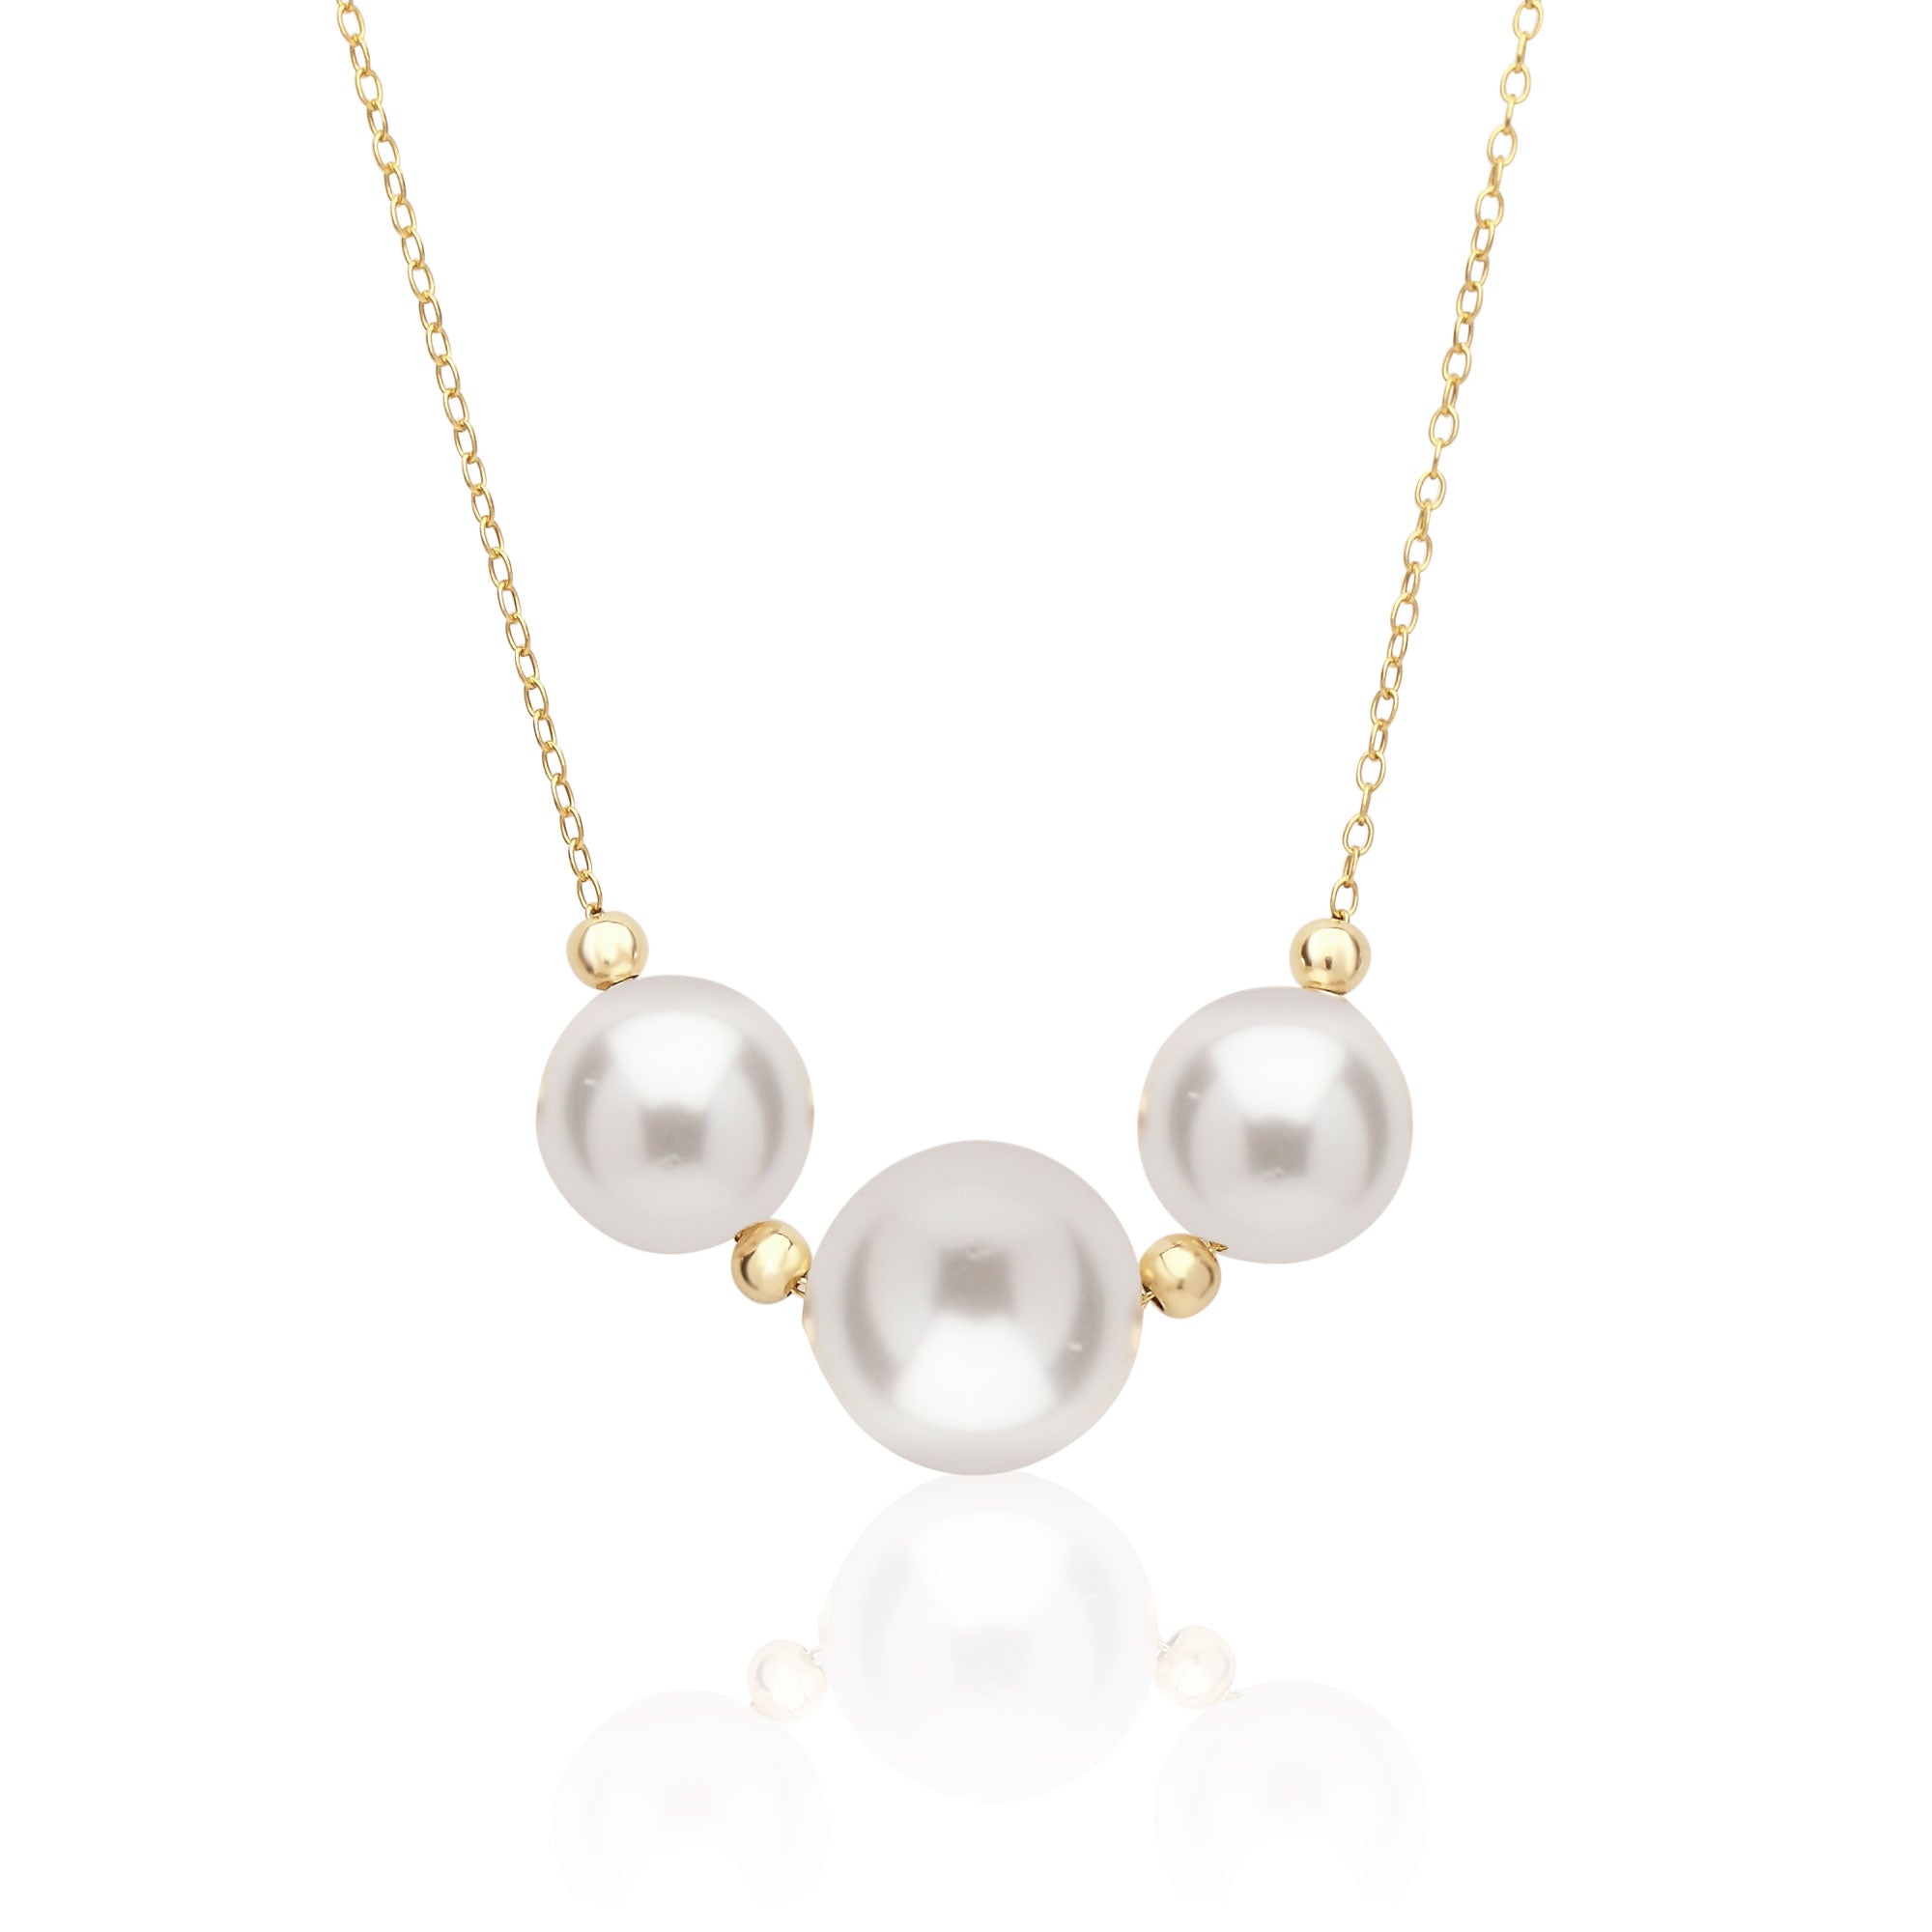 14K White Gold Pearl & Diamond Pendant Necklace